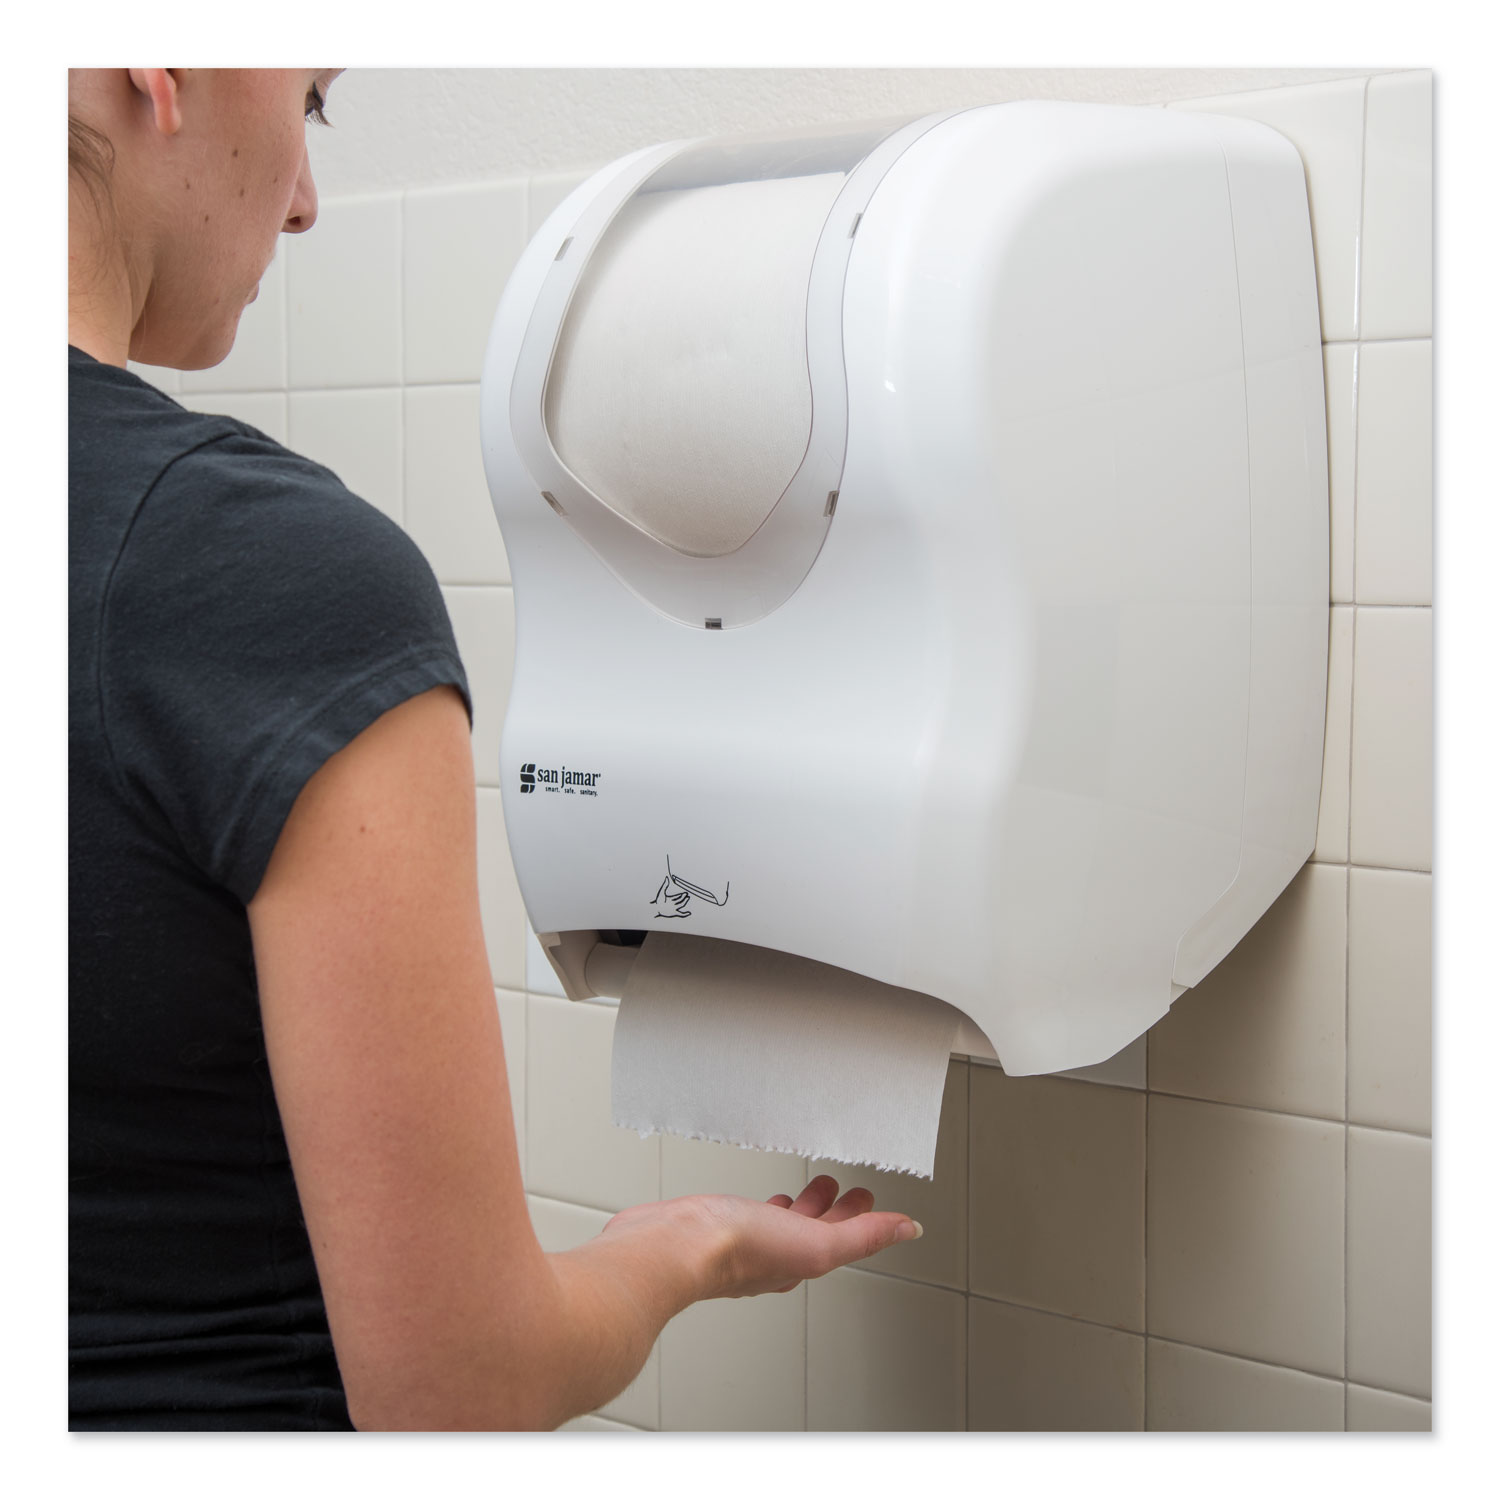 San Jamar Smart System with IQ Sensor Towel Dispenser, Black/Silver